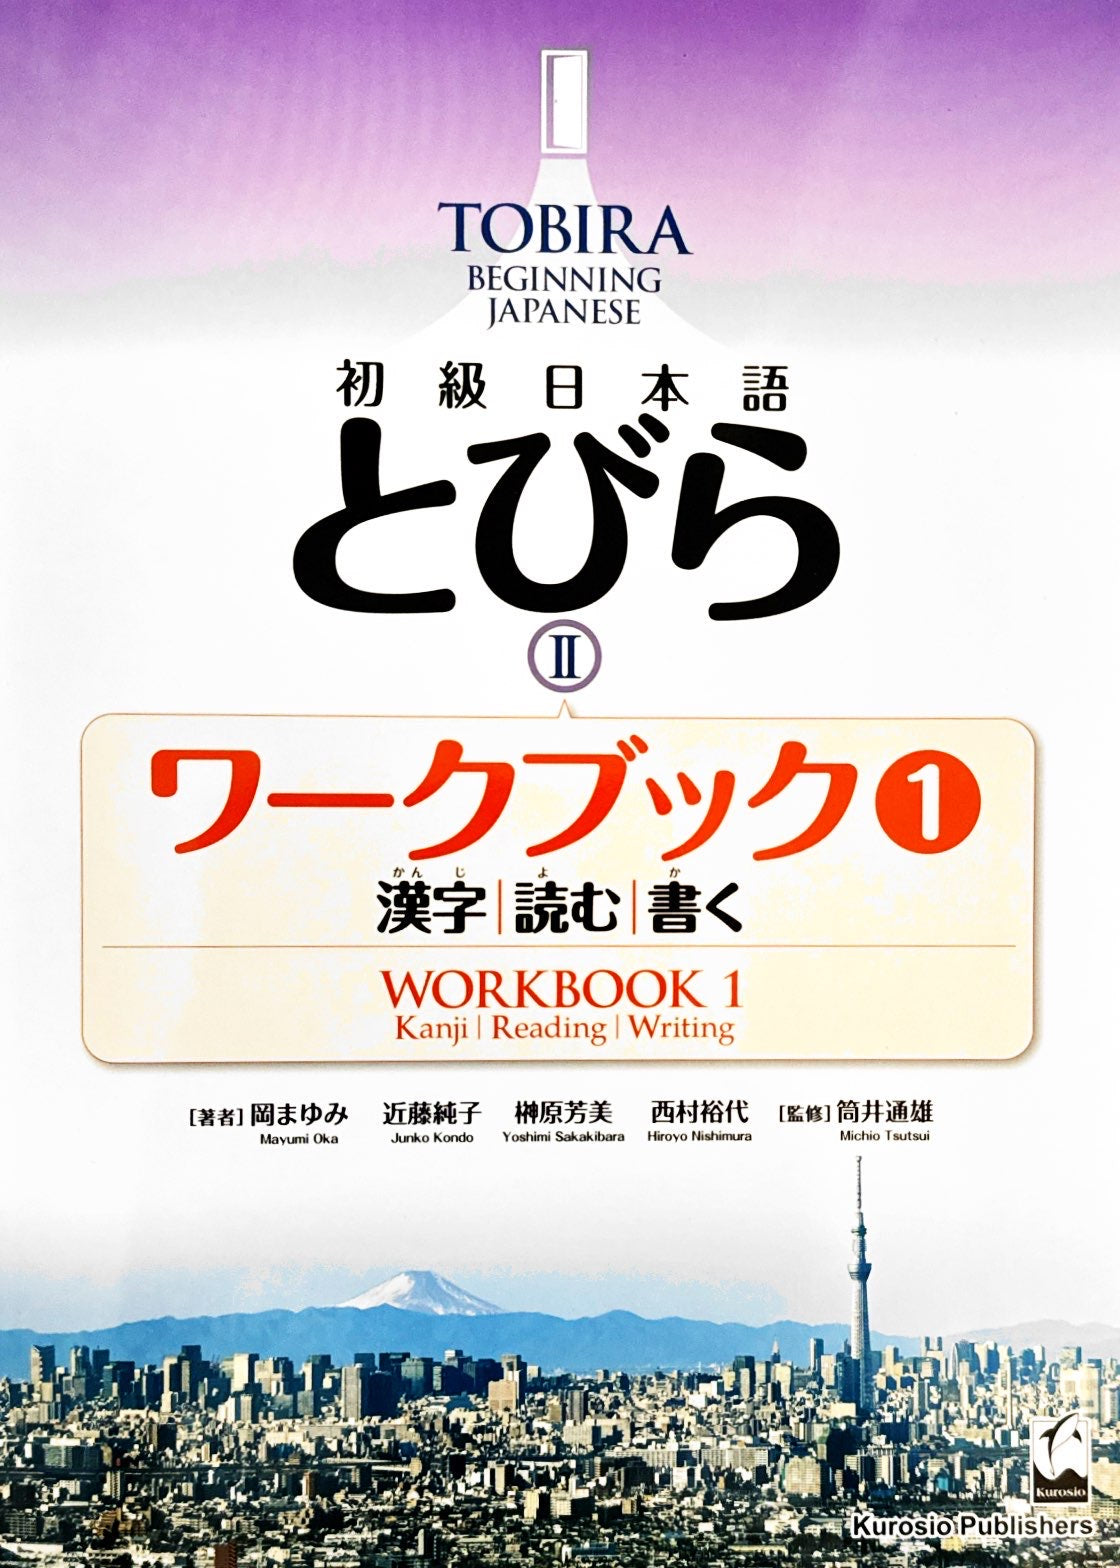 Tobira Workbook II - Kanji Reading Writing [BEGINNERS]